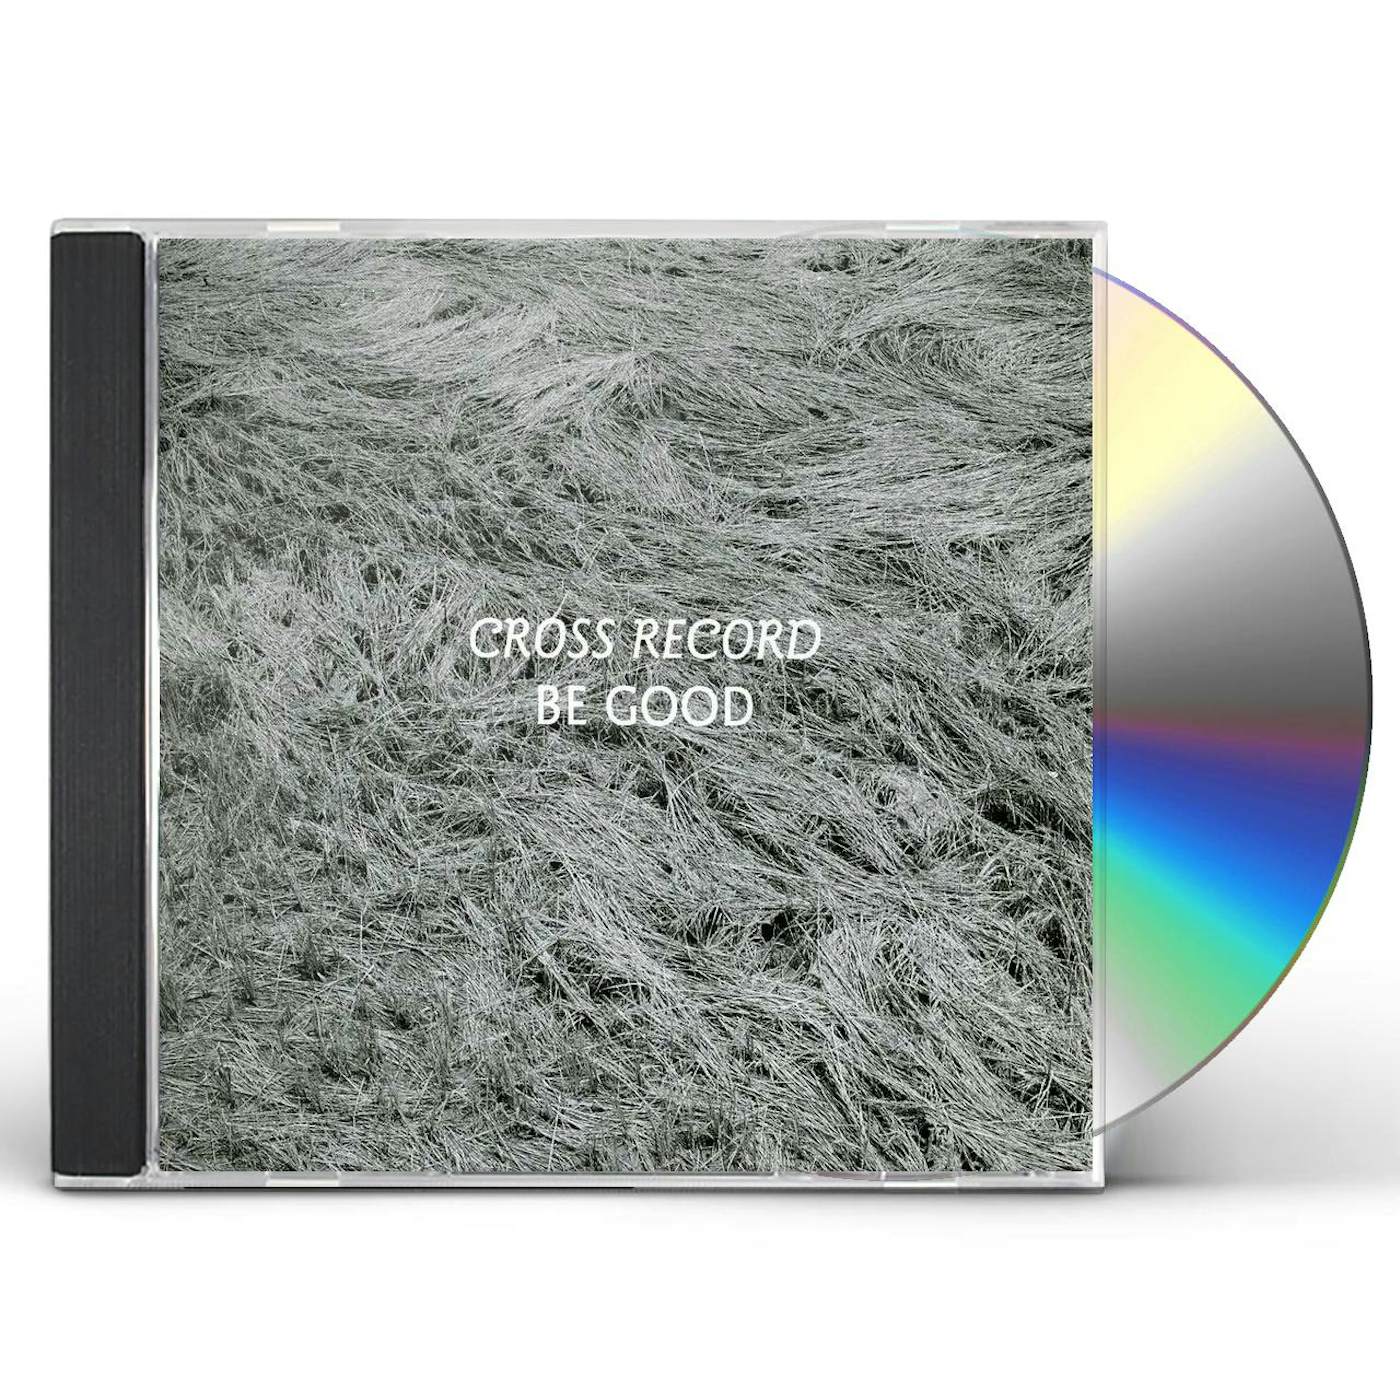 Cross Record BE GOOD CD